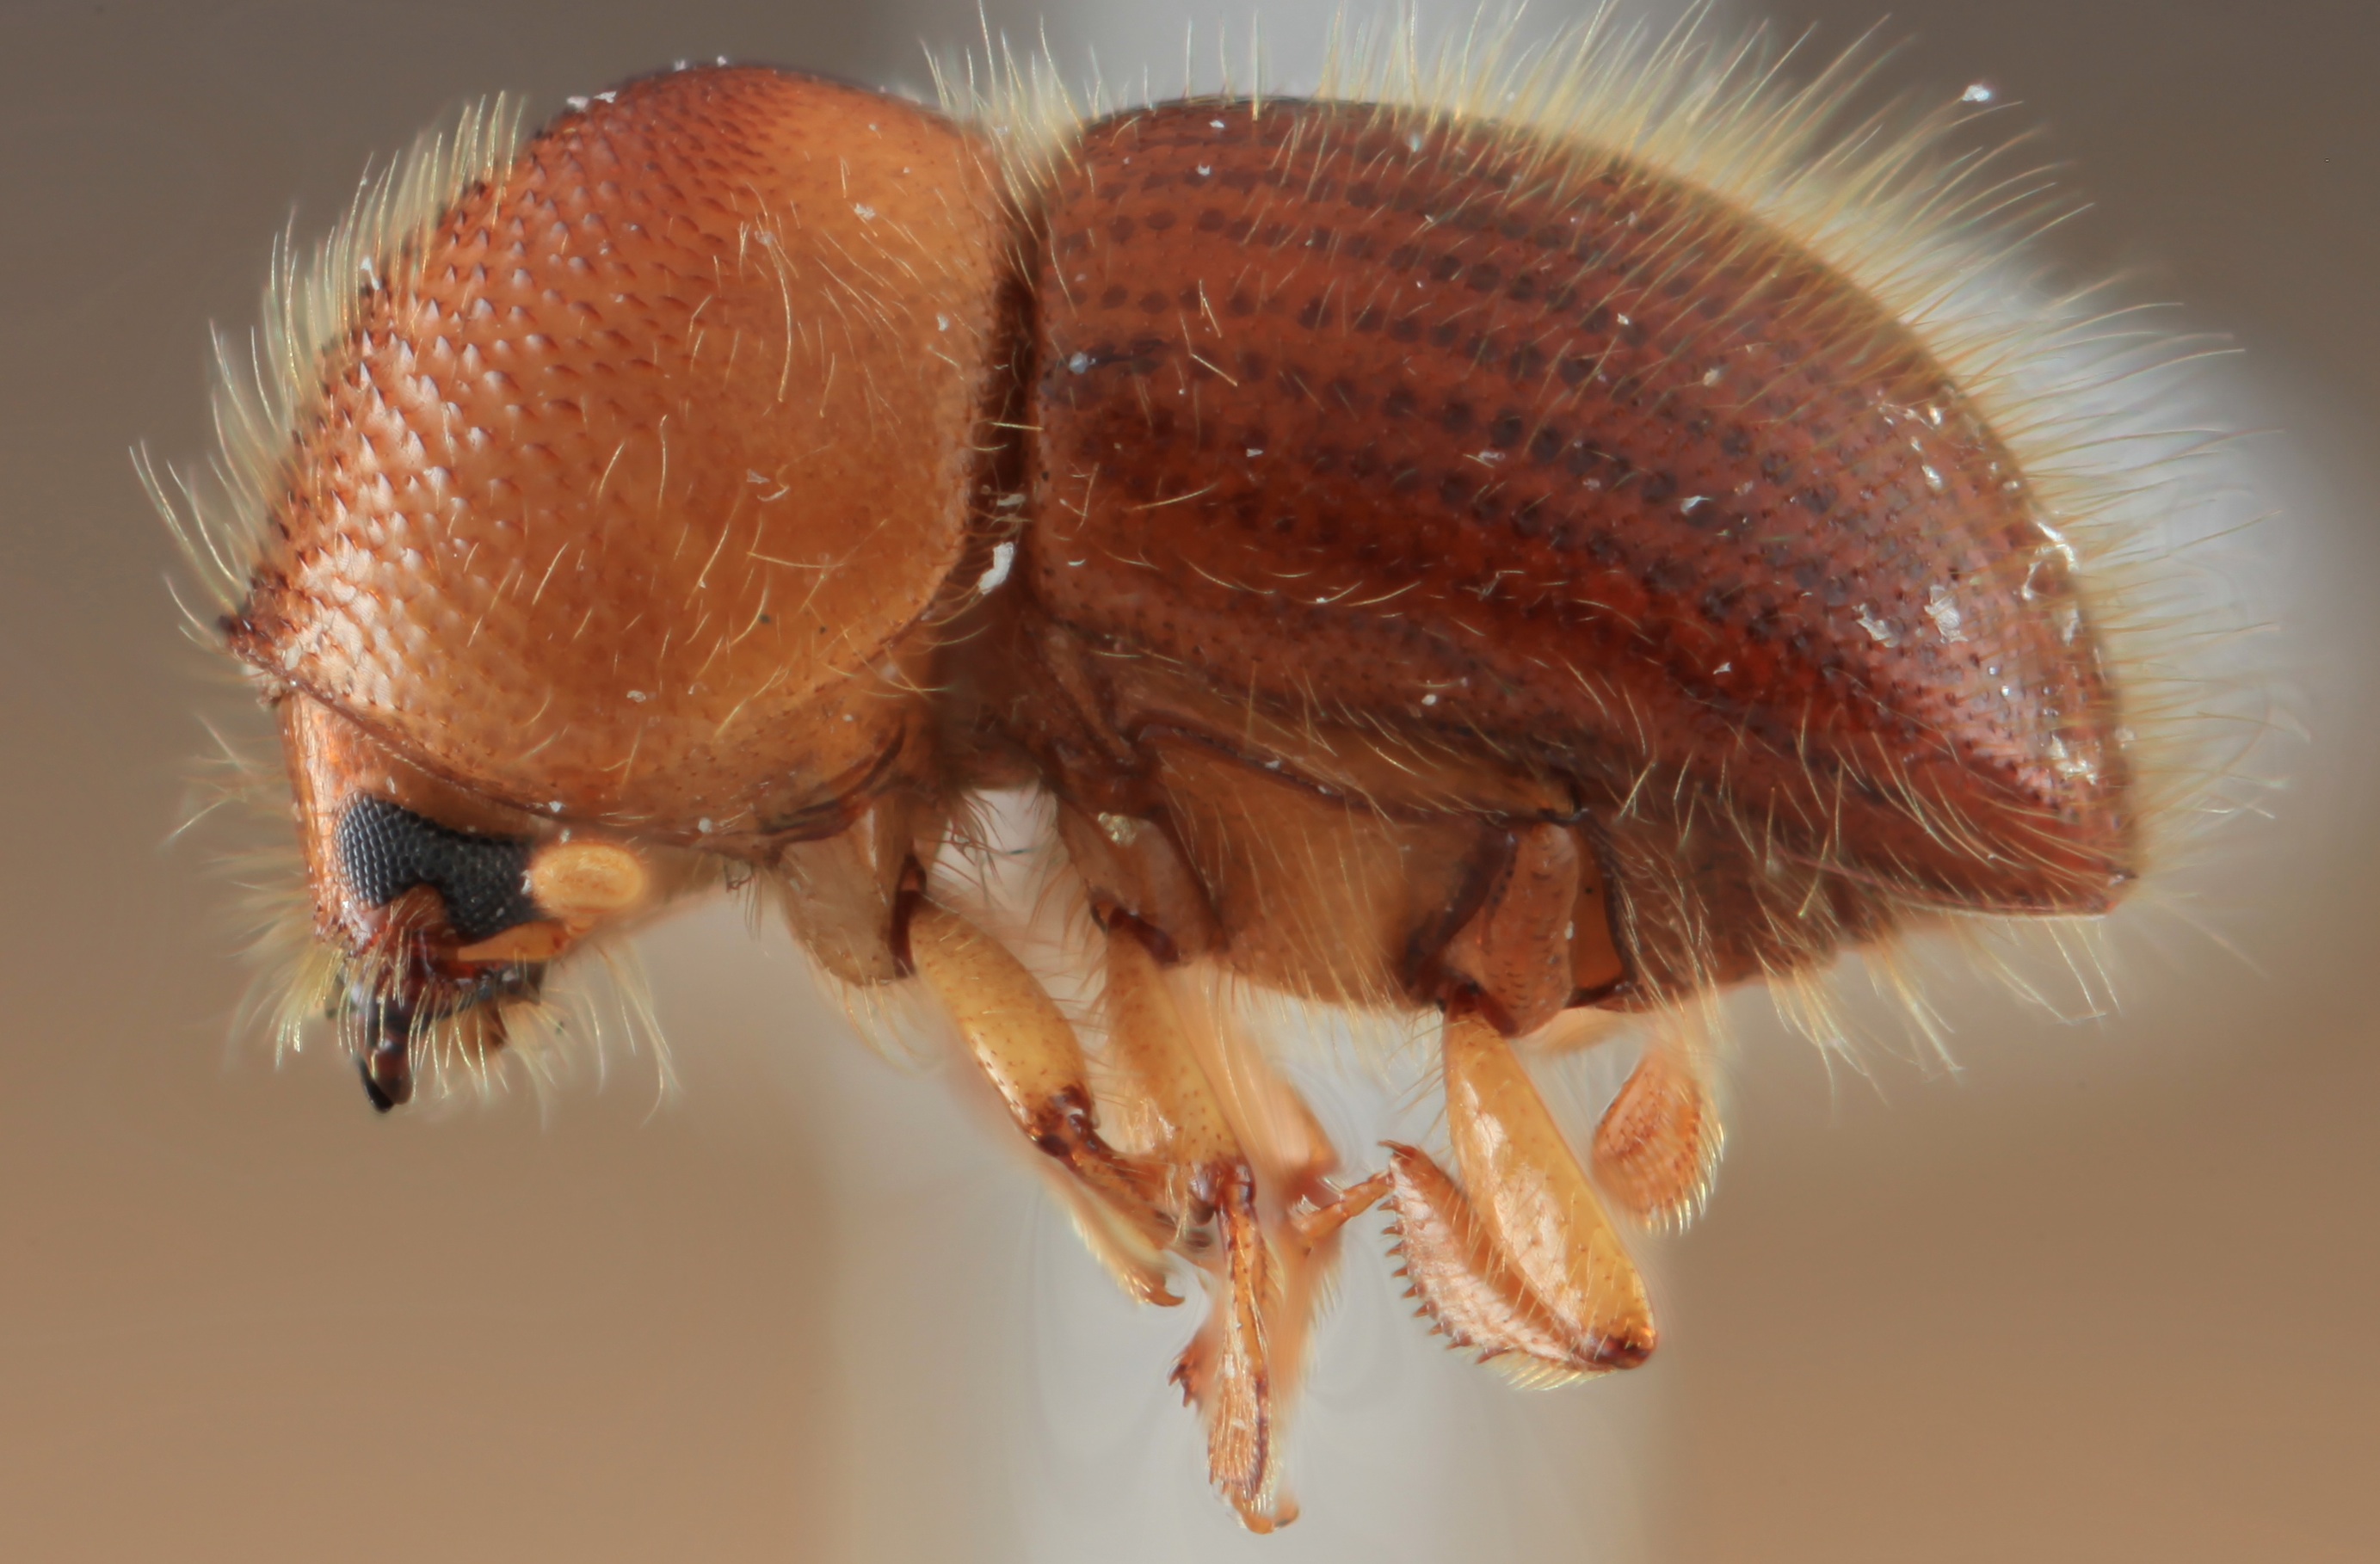 New genus of ambrosia beetle